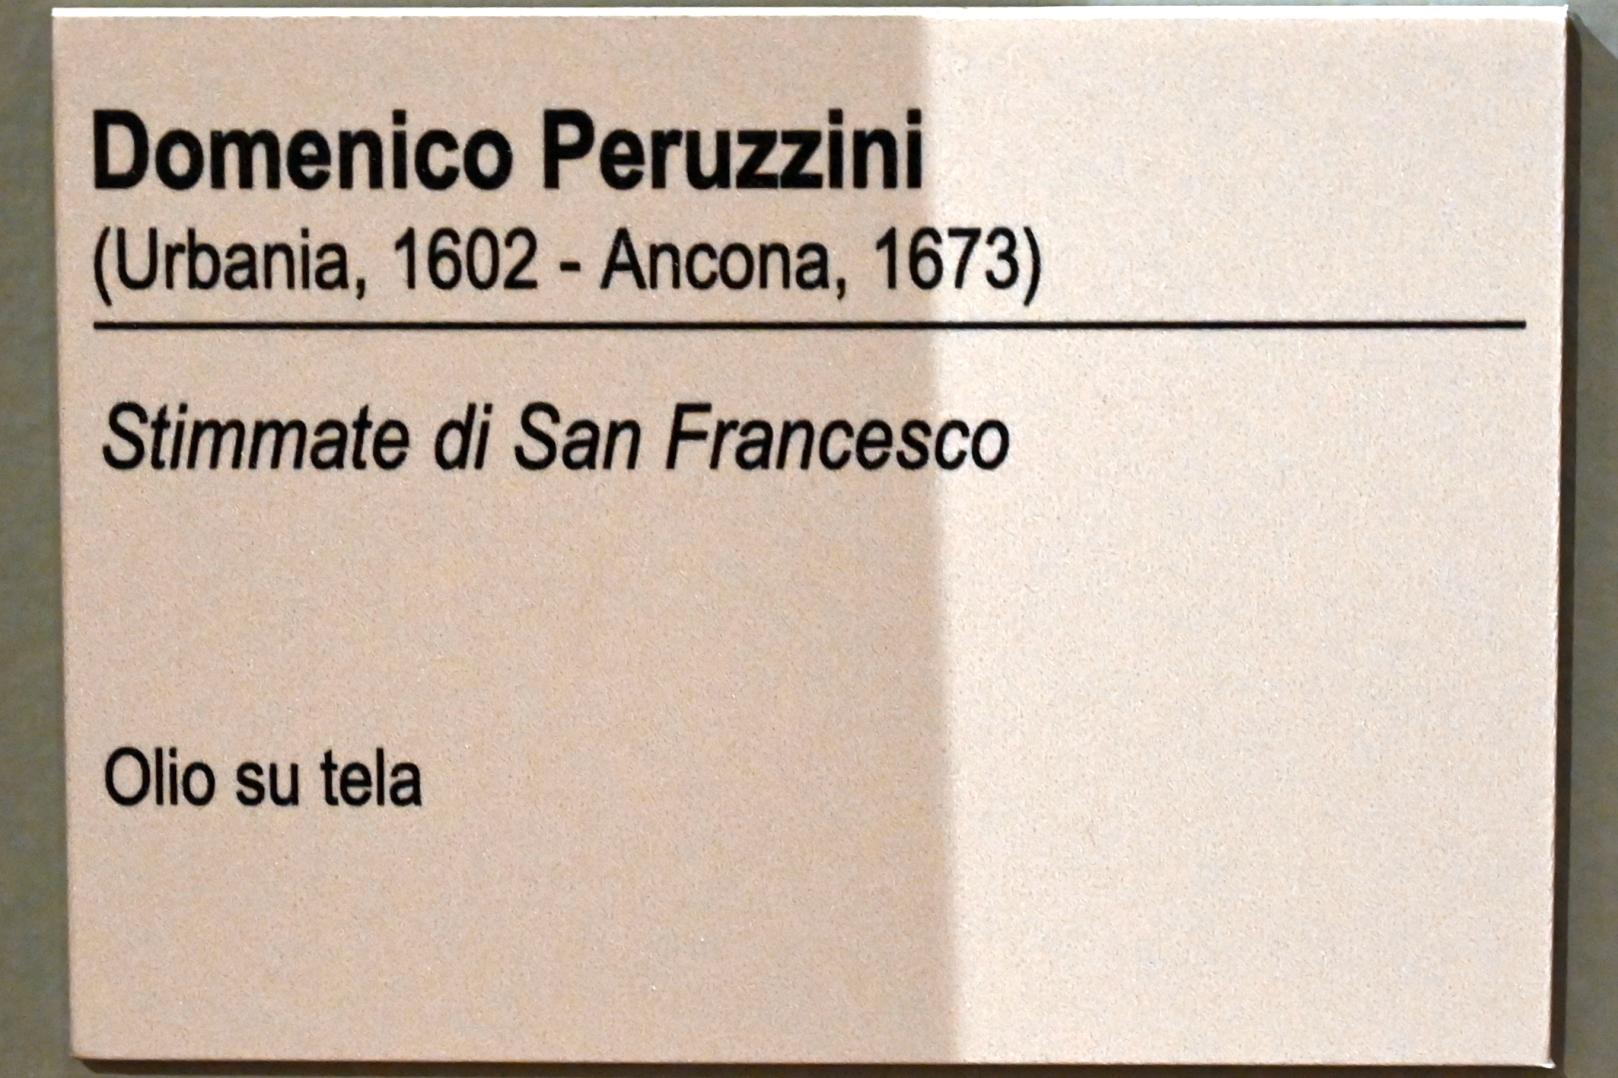 Domenico Peruzzini (Undatiert), Stigmatisation des Hl. Franziskus, Ancona, Pinacoteca civica Francesco Podesti, Obergeschoss Saal 5, Undatiert, Bild 2/2